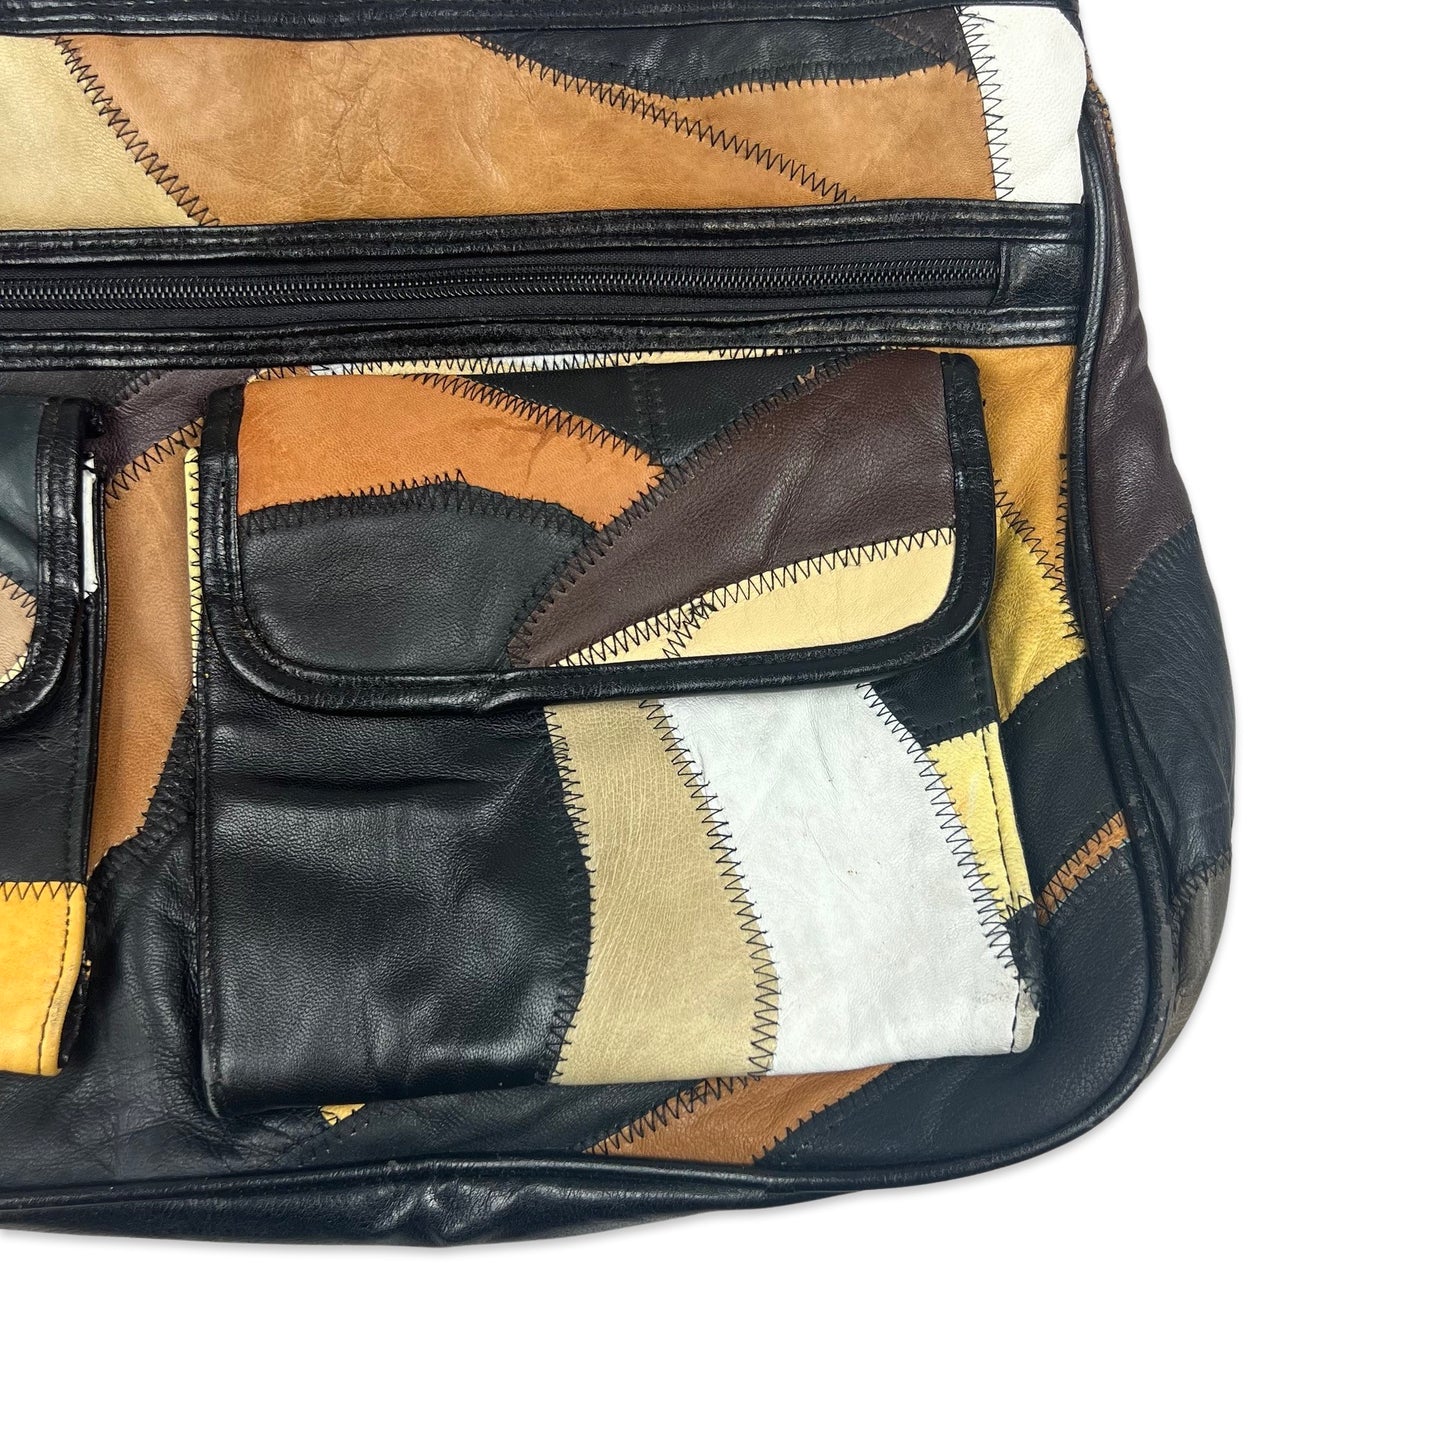 Vintage 90s Black Brown Orange Cream Leather Patchwork Handbag